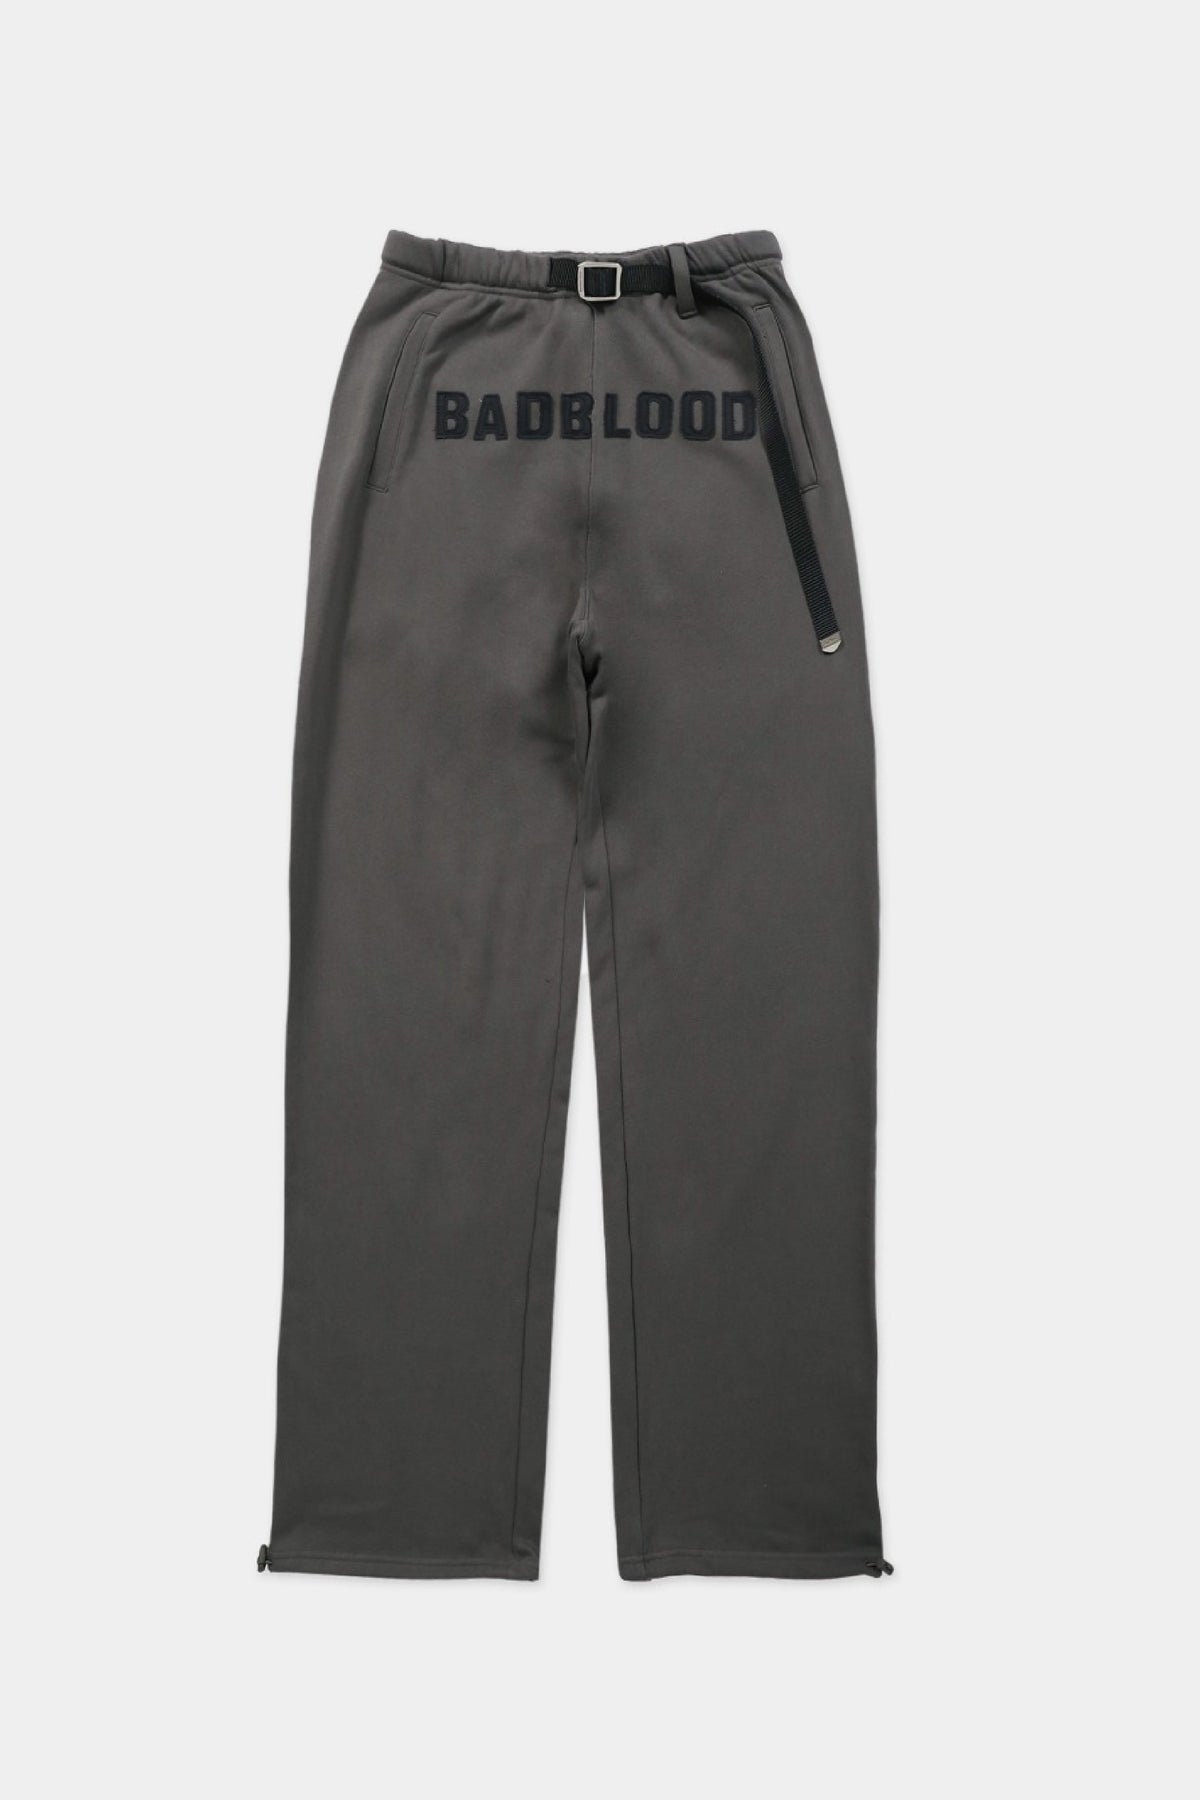 Badblood Leather Logo 2 Way Sweatpants Loose Fit Charcoal